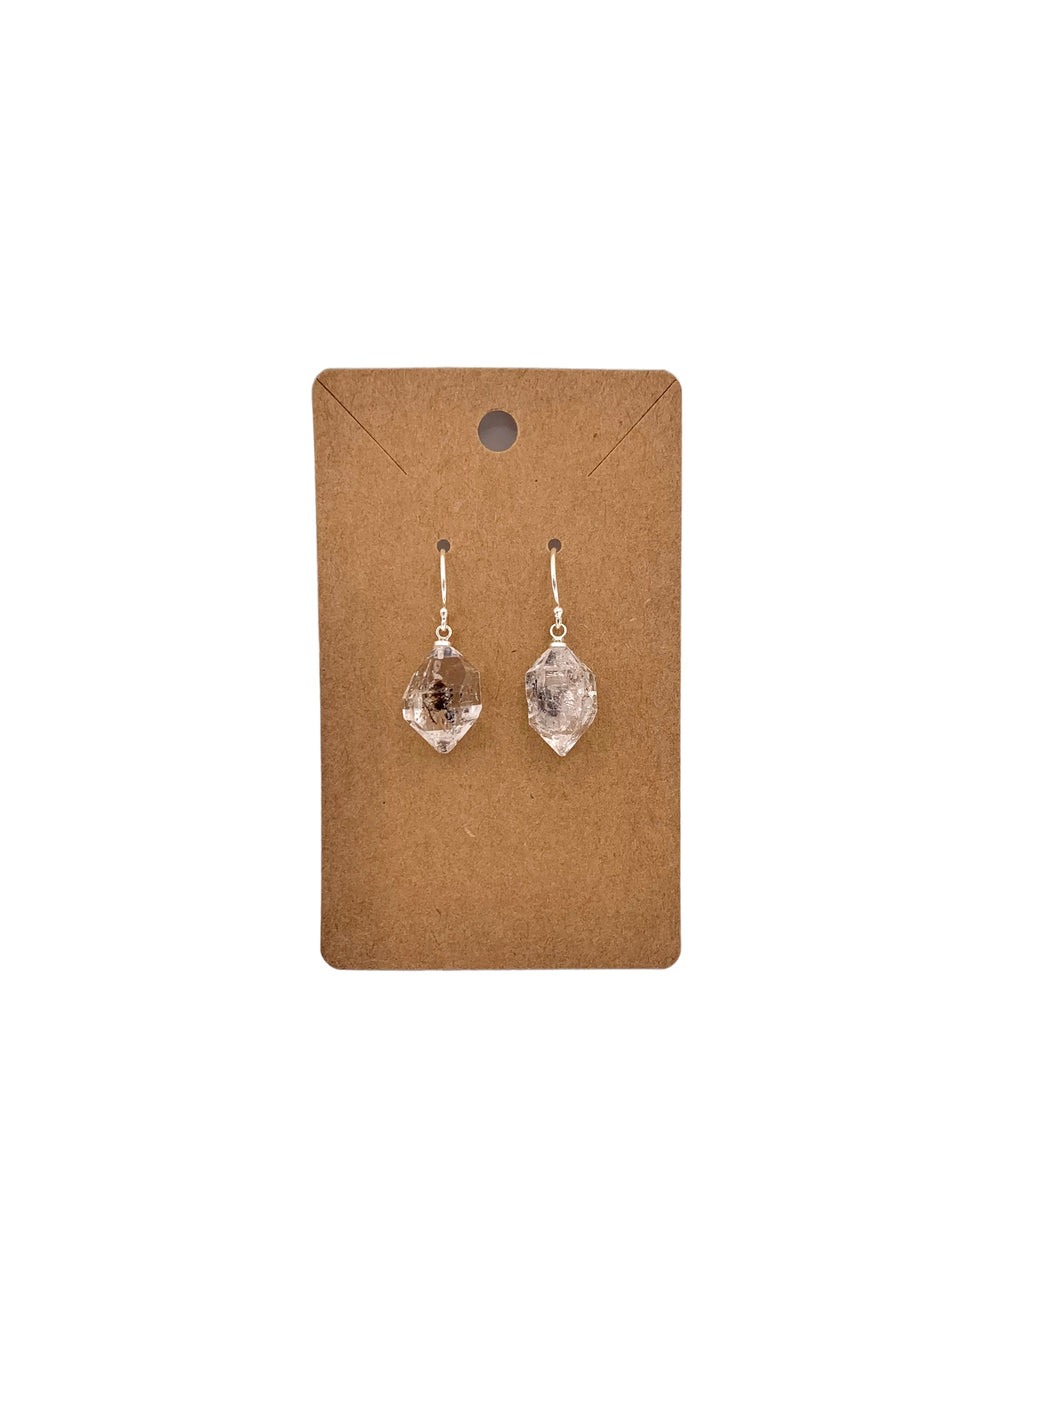 Crystal Jewellery - Rough Stone Earrings